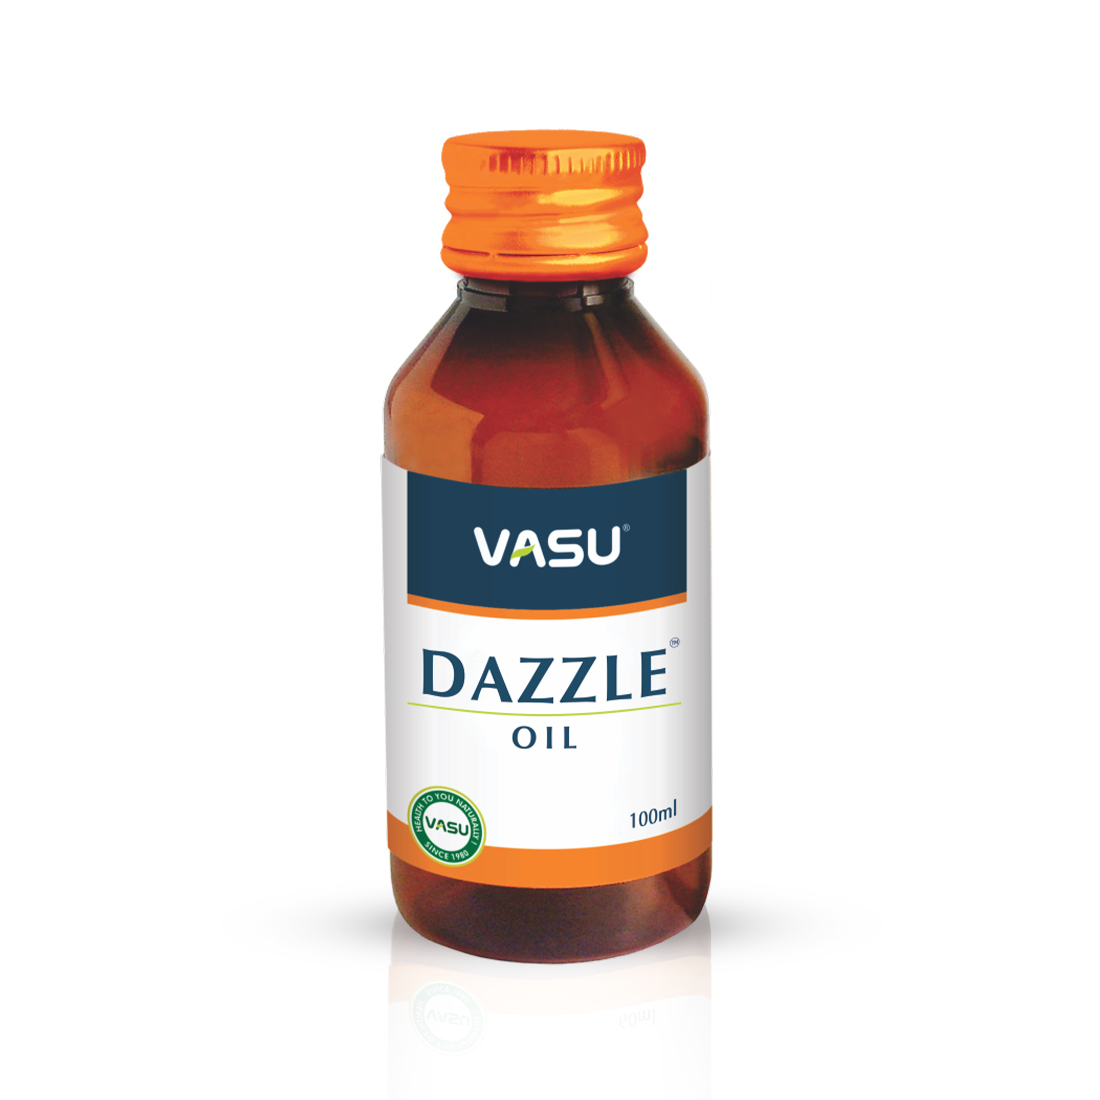 Buy Vasu Dazzle Oil at Best Price Online